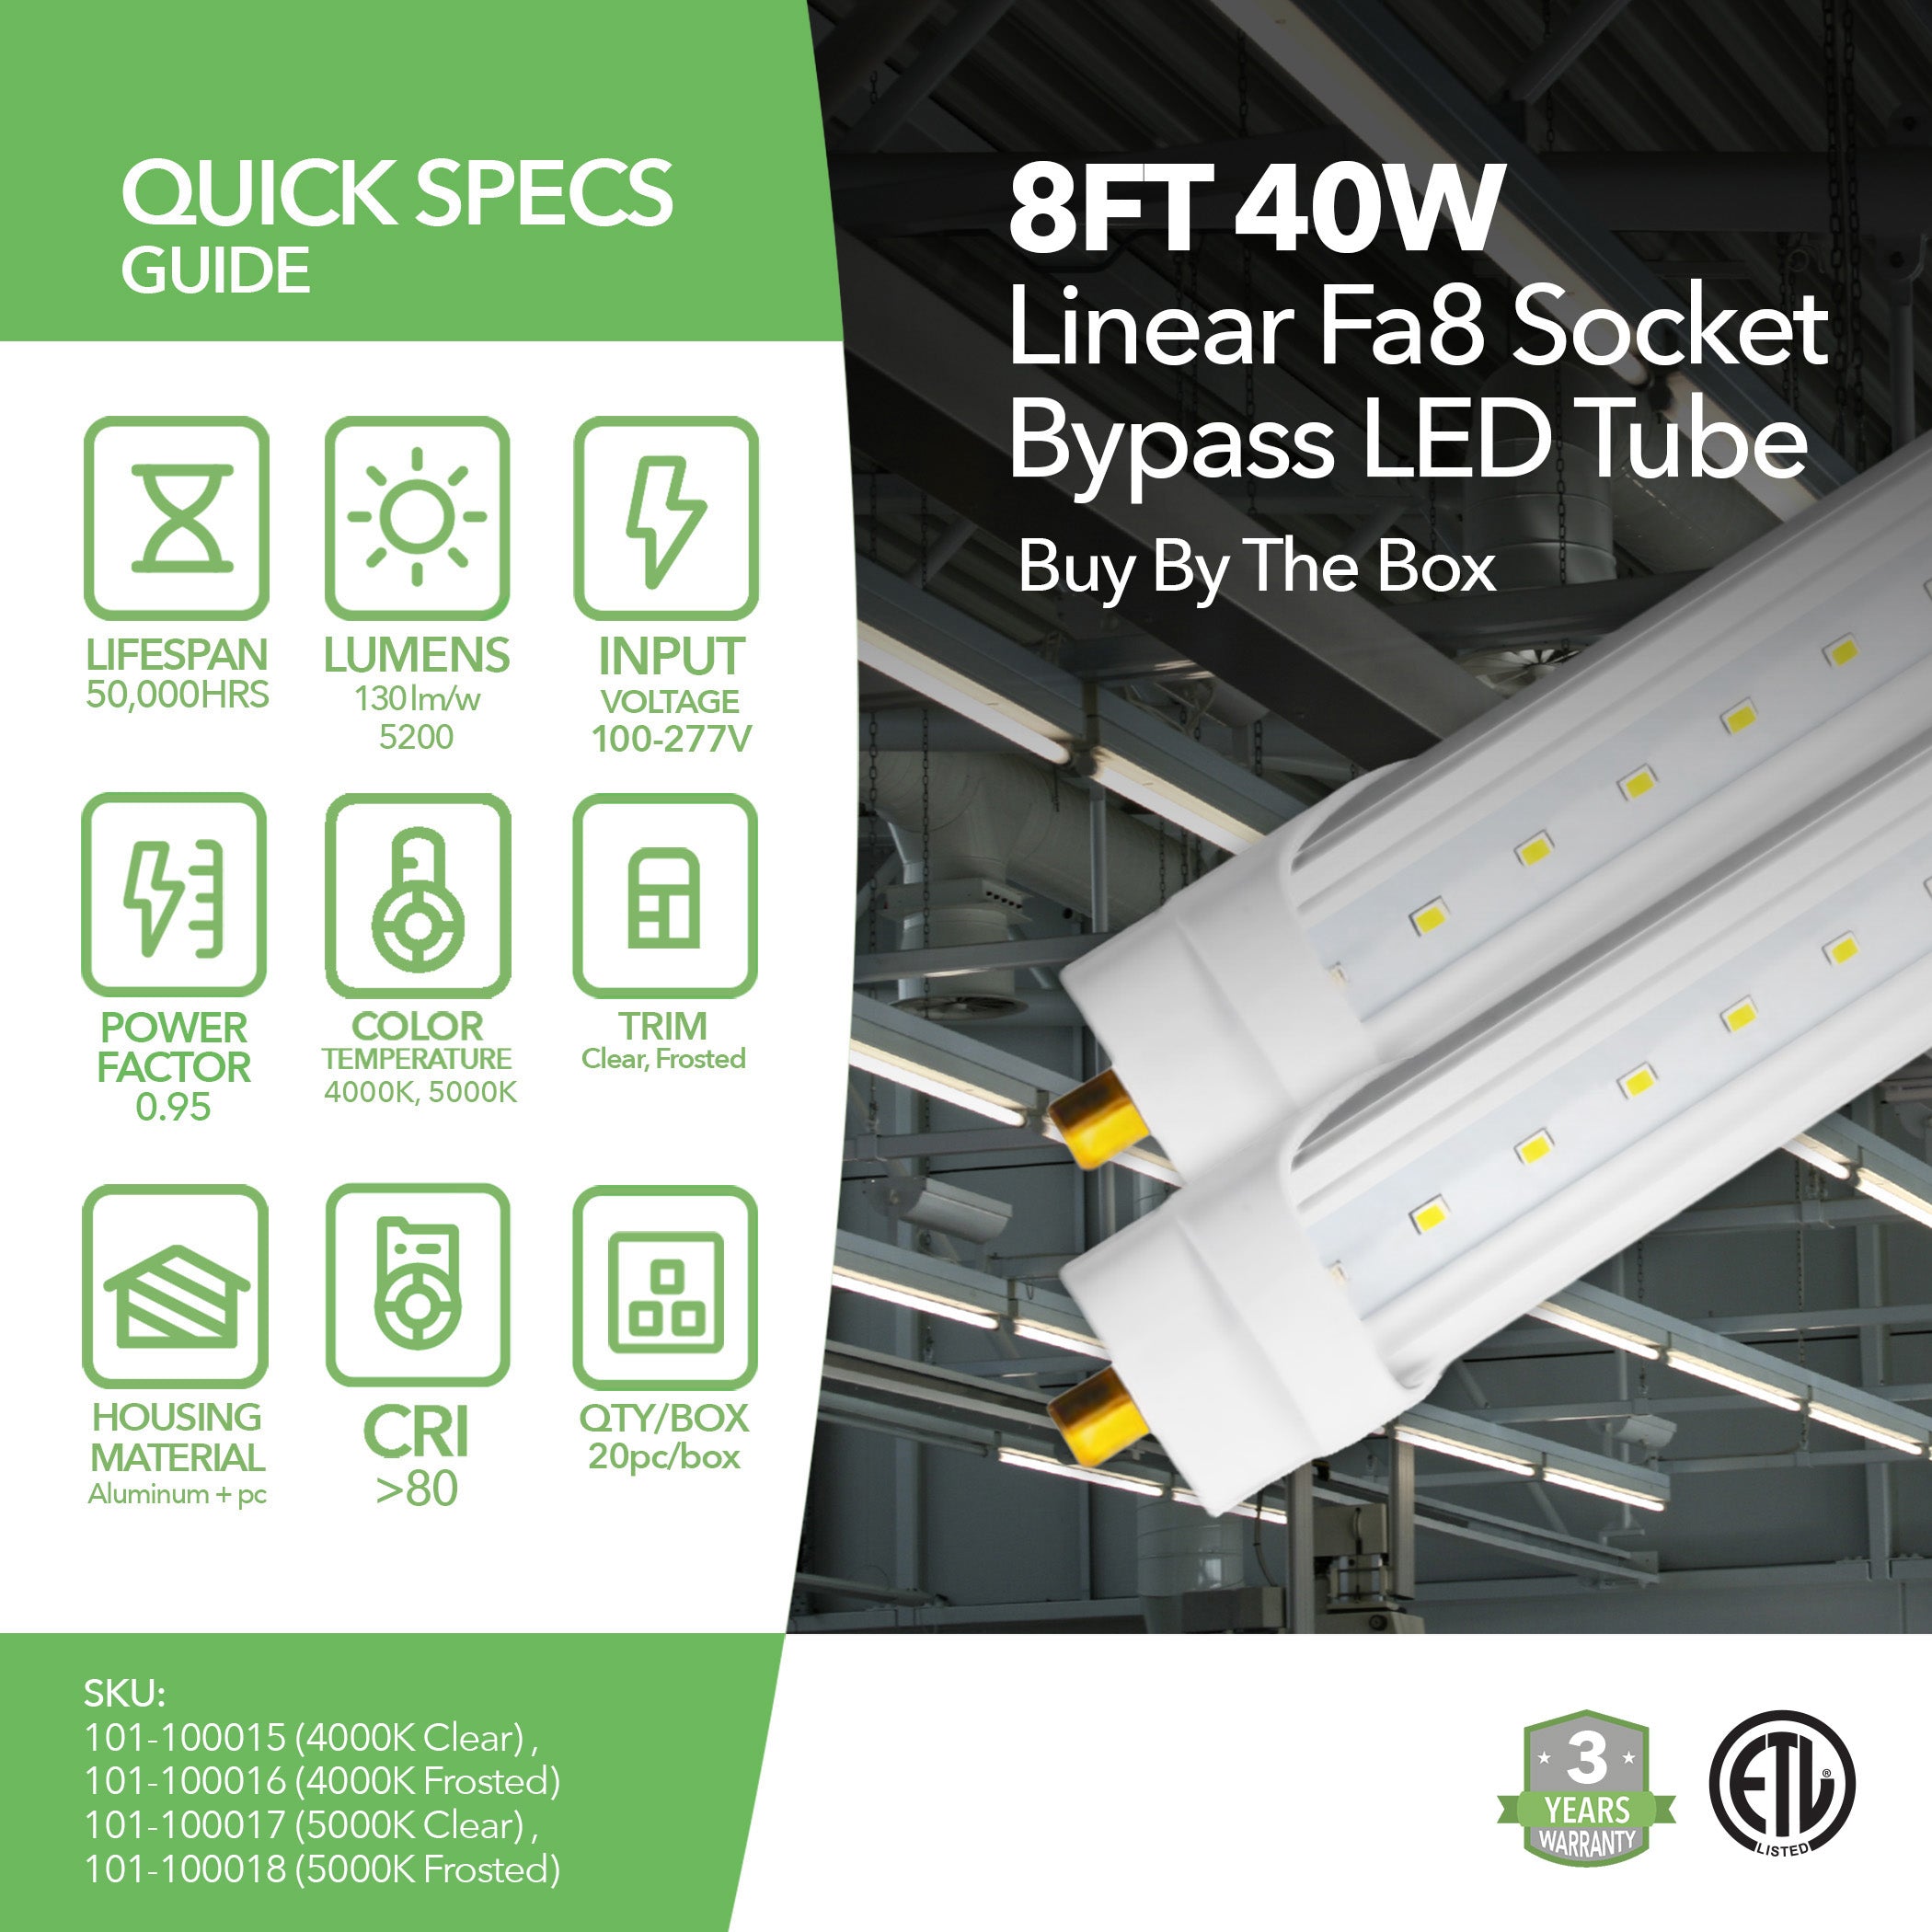 8FT ETL LED Tube - 40W - Double-Ended Bypass Tube, Fa8 Socket - 3 Year Warranty